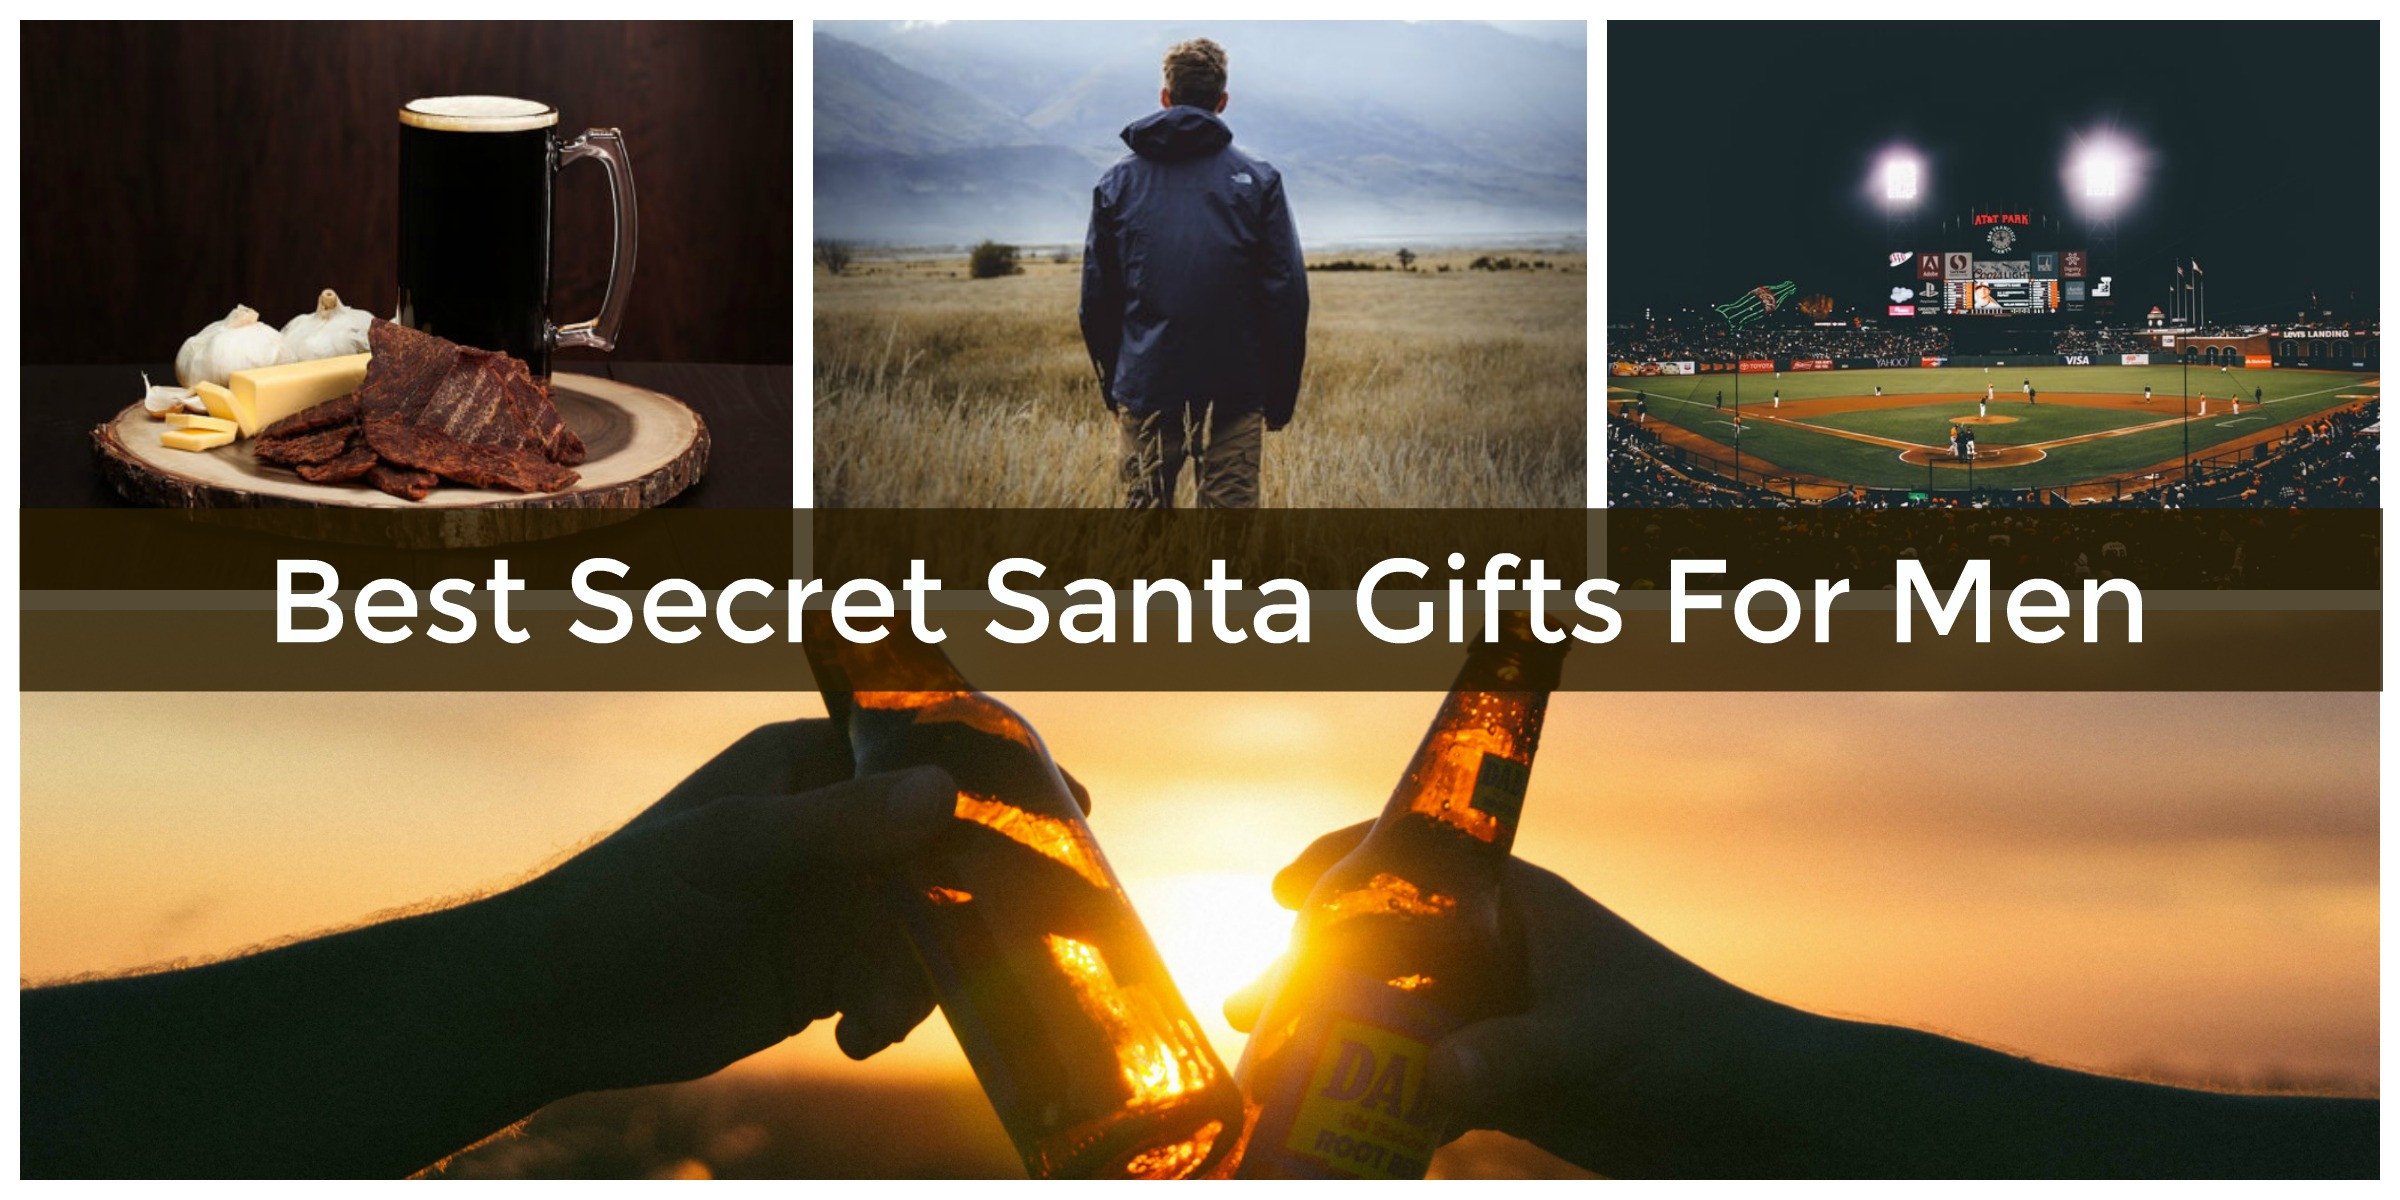 Best ideas about Secret Santa Gift Ideas For Guys
. Save or Pin Manly Secret Santa Gifts for Guys Now.